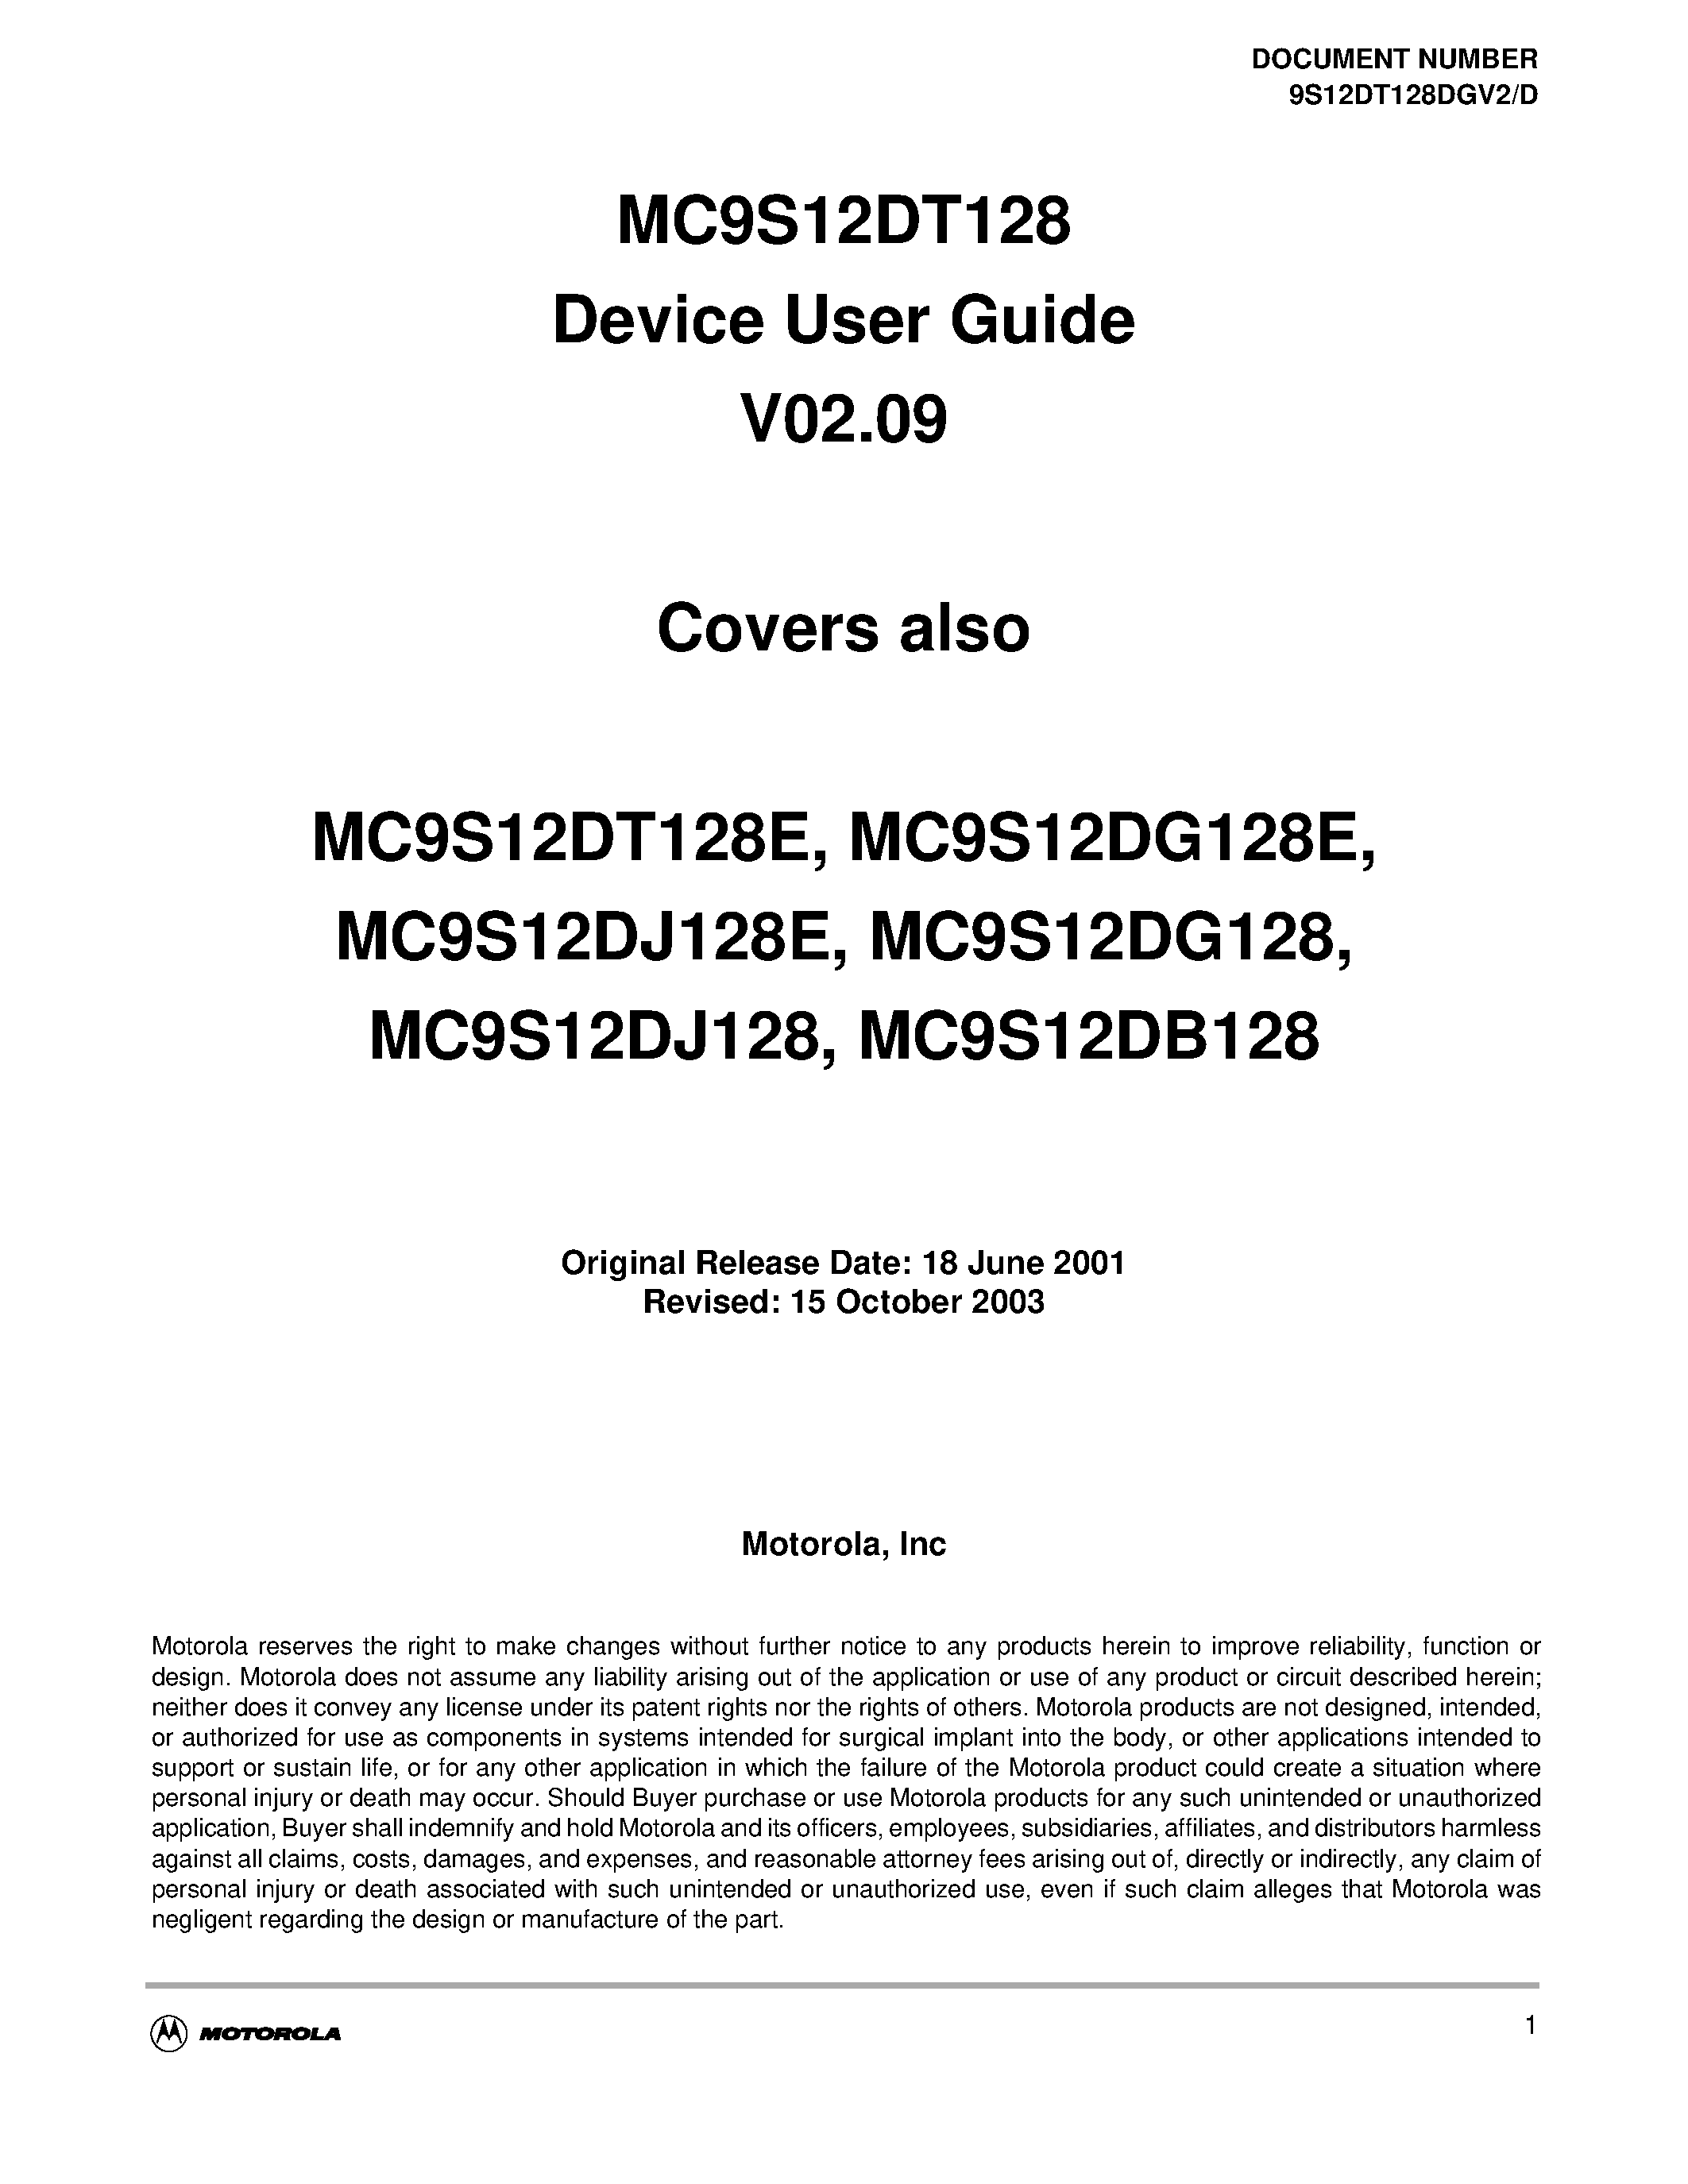 Datasheet S12EETS2KV1 - MC9S12DT128 Device User Guide V02.09 page 1